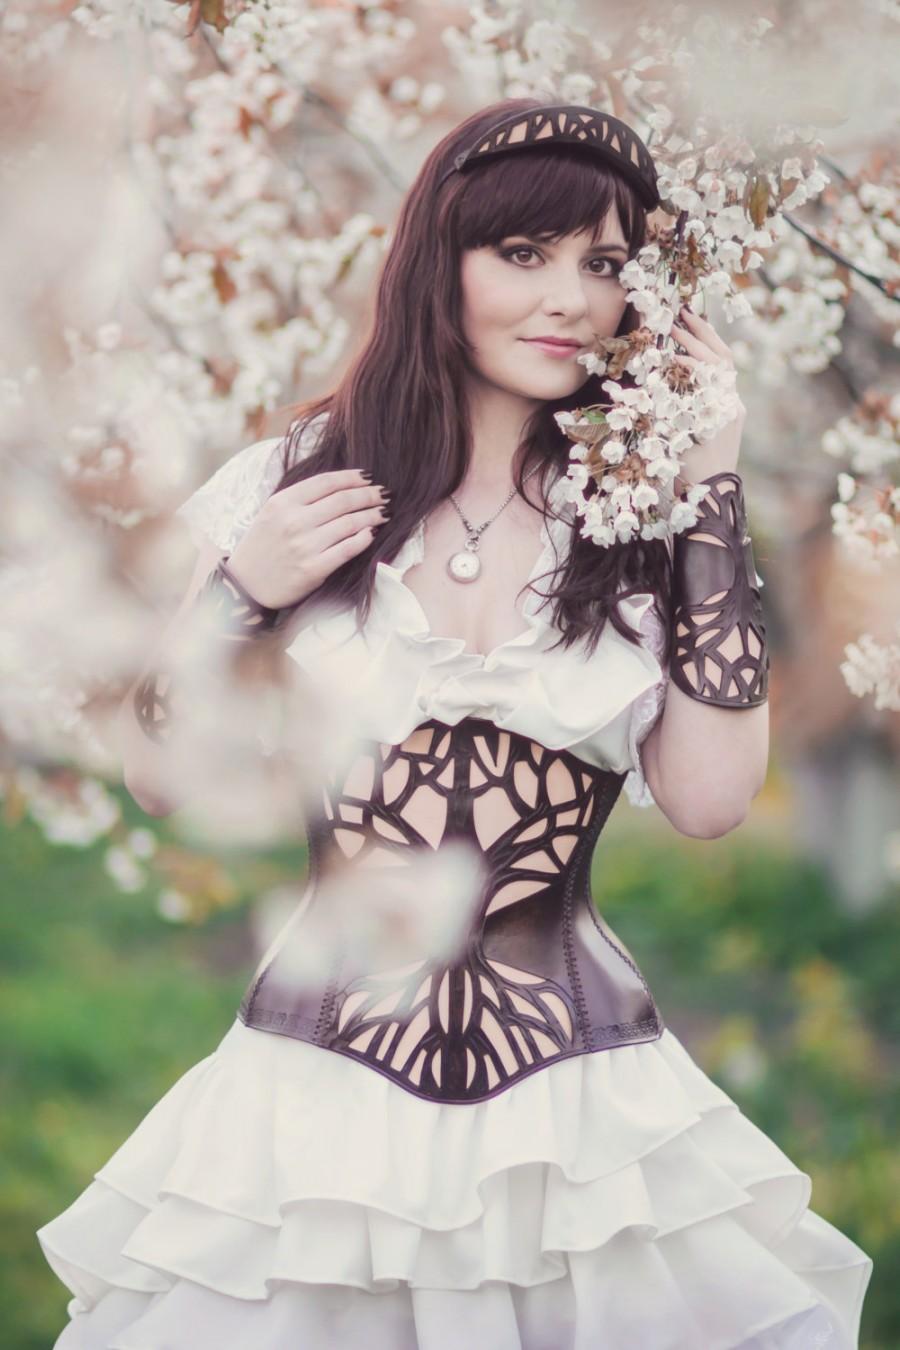 زفاف - Full outfit dress with leather corset and adds